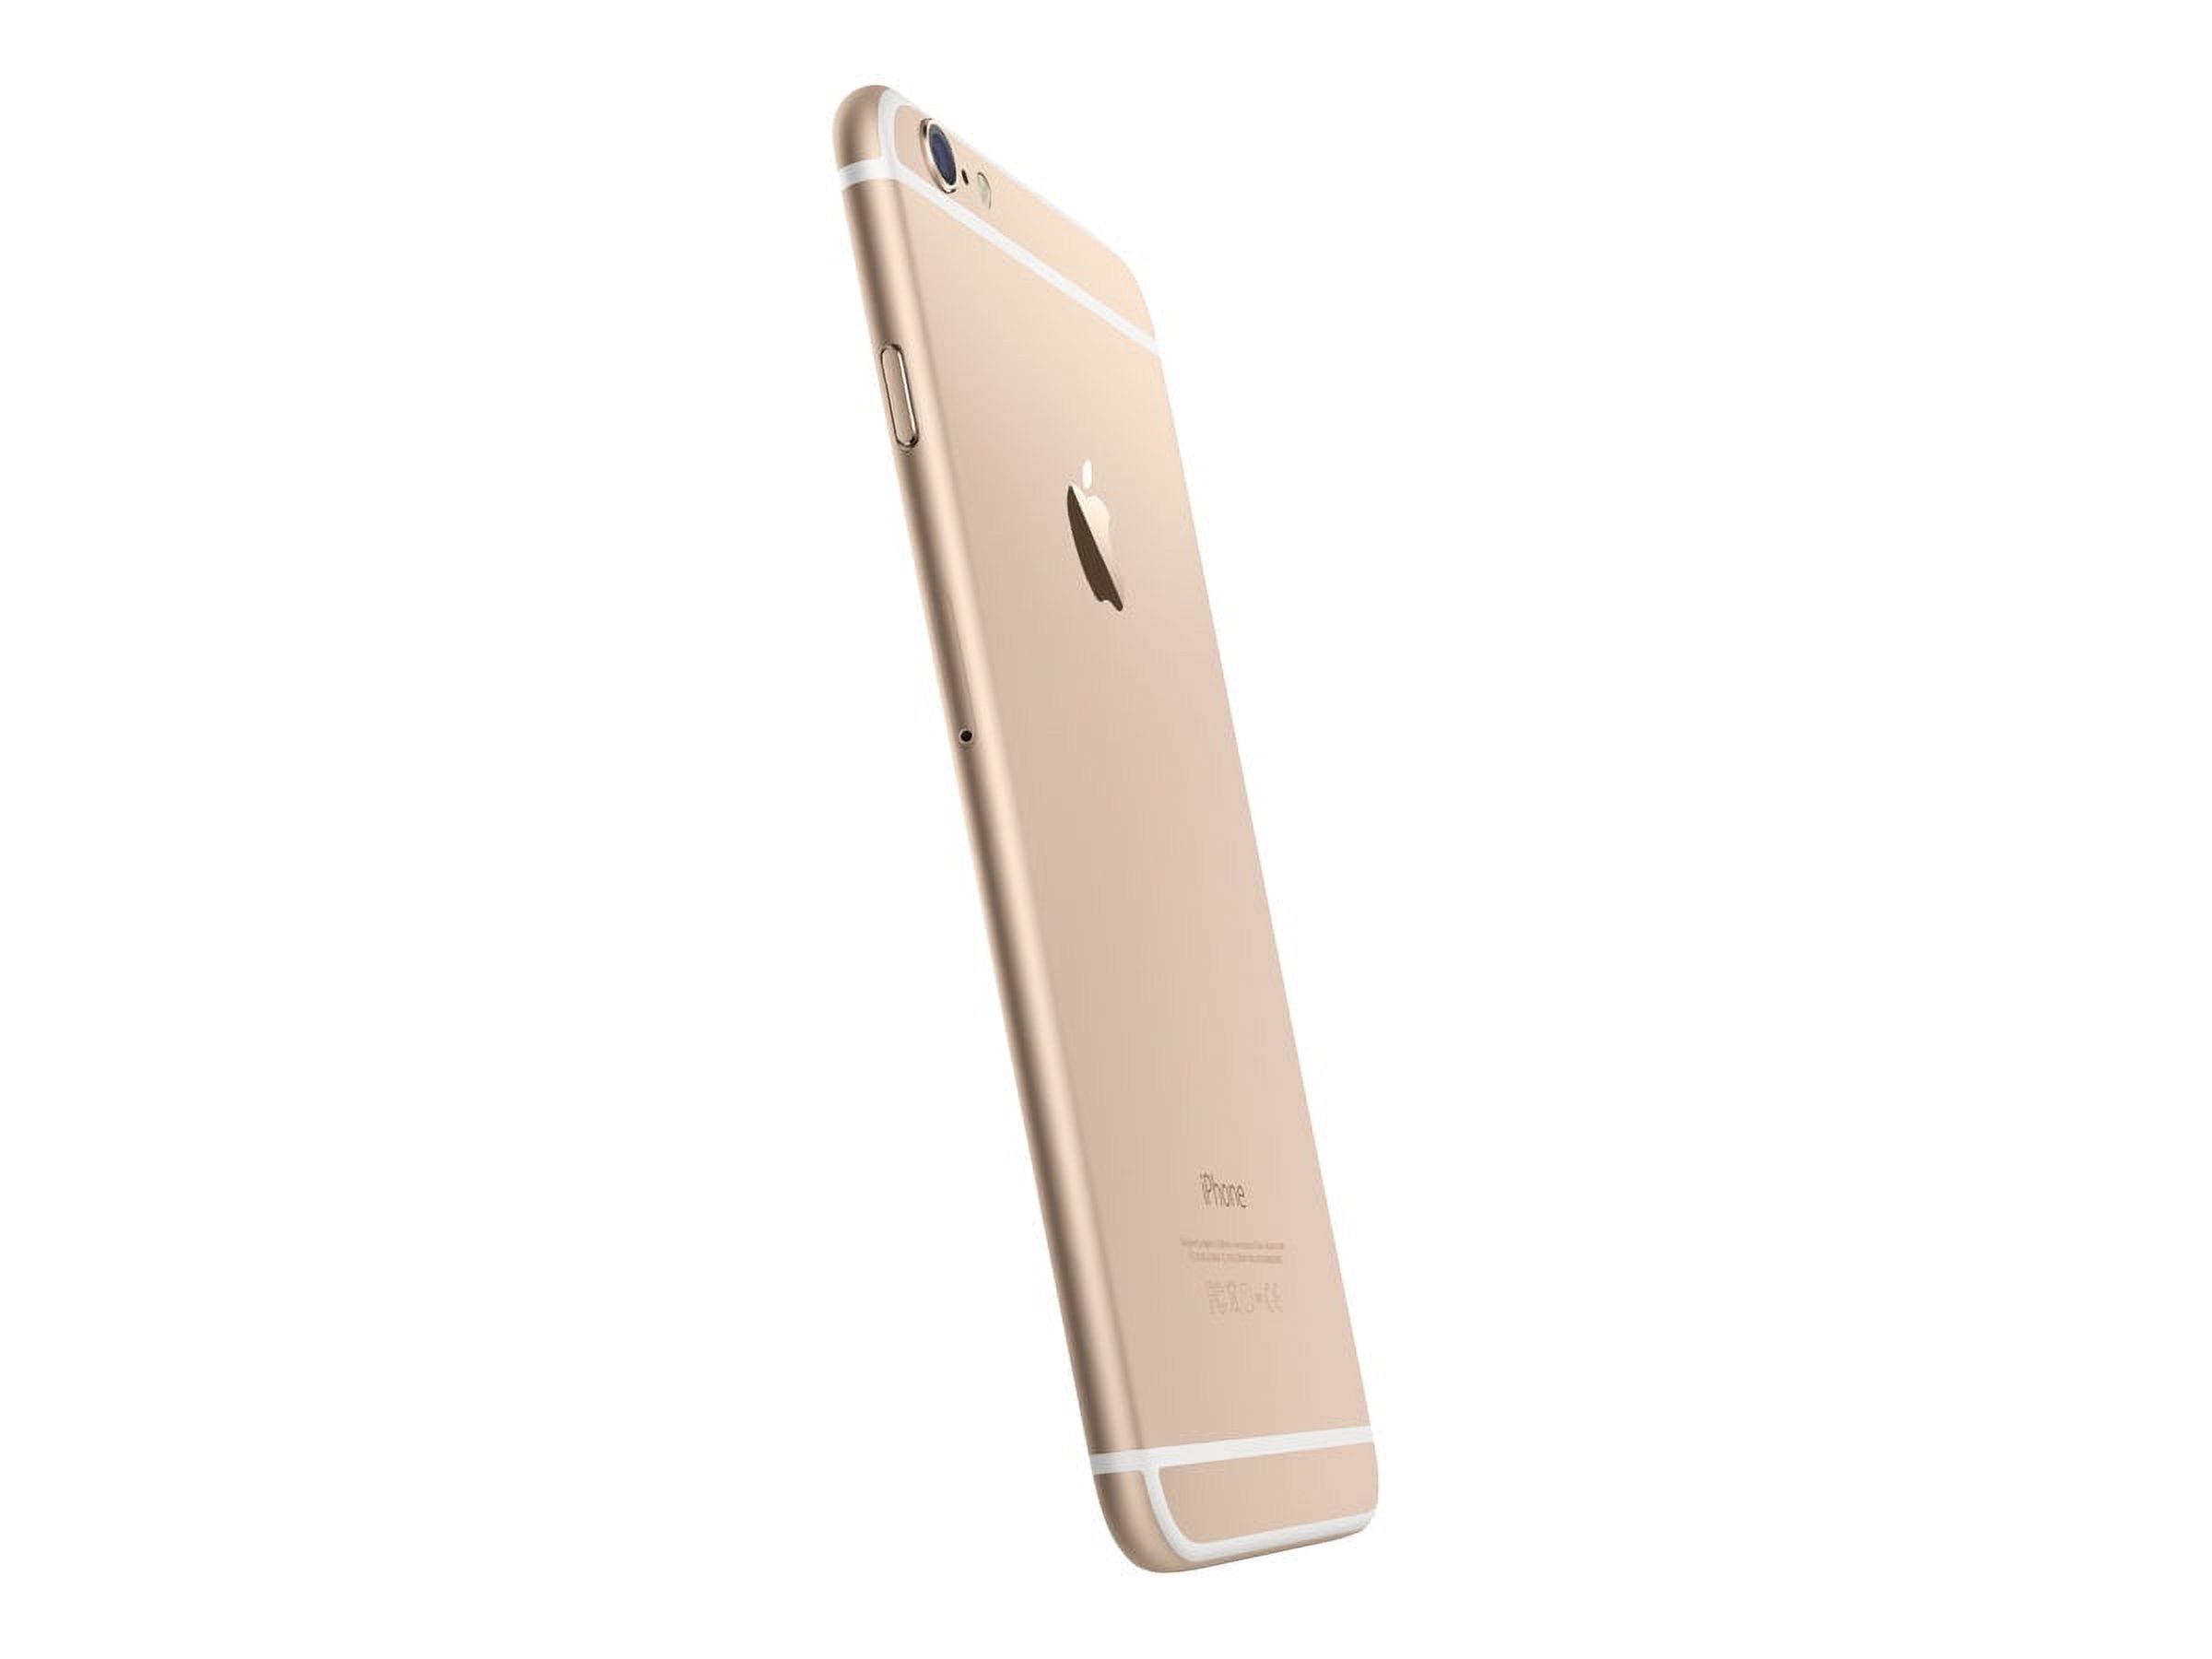 Used Apple iPhone 6 Plus 16GB, Gold - Unlocked GSM - image 2 of 3